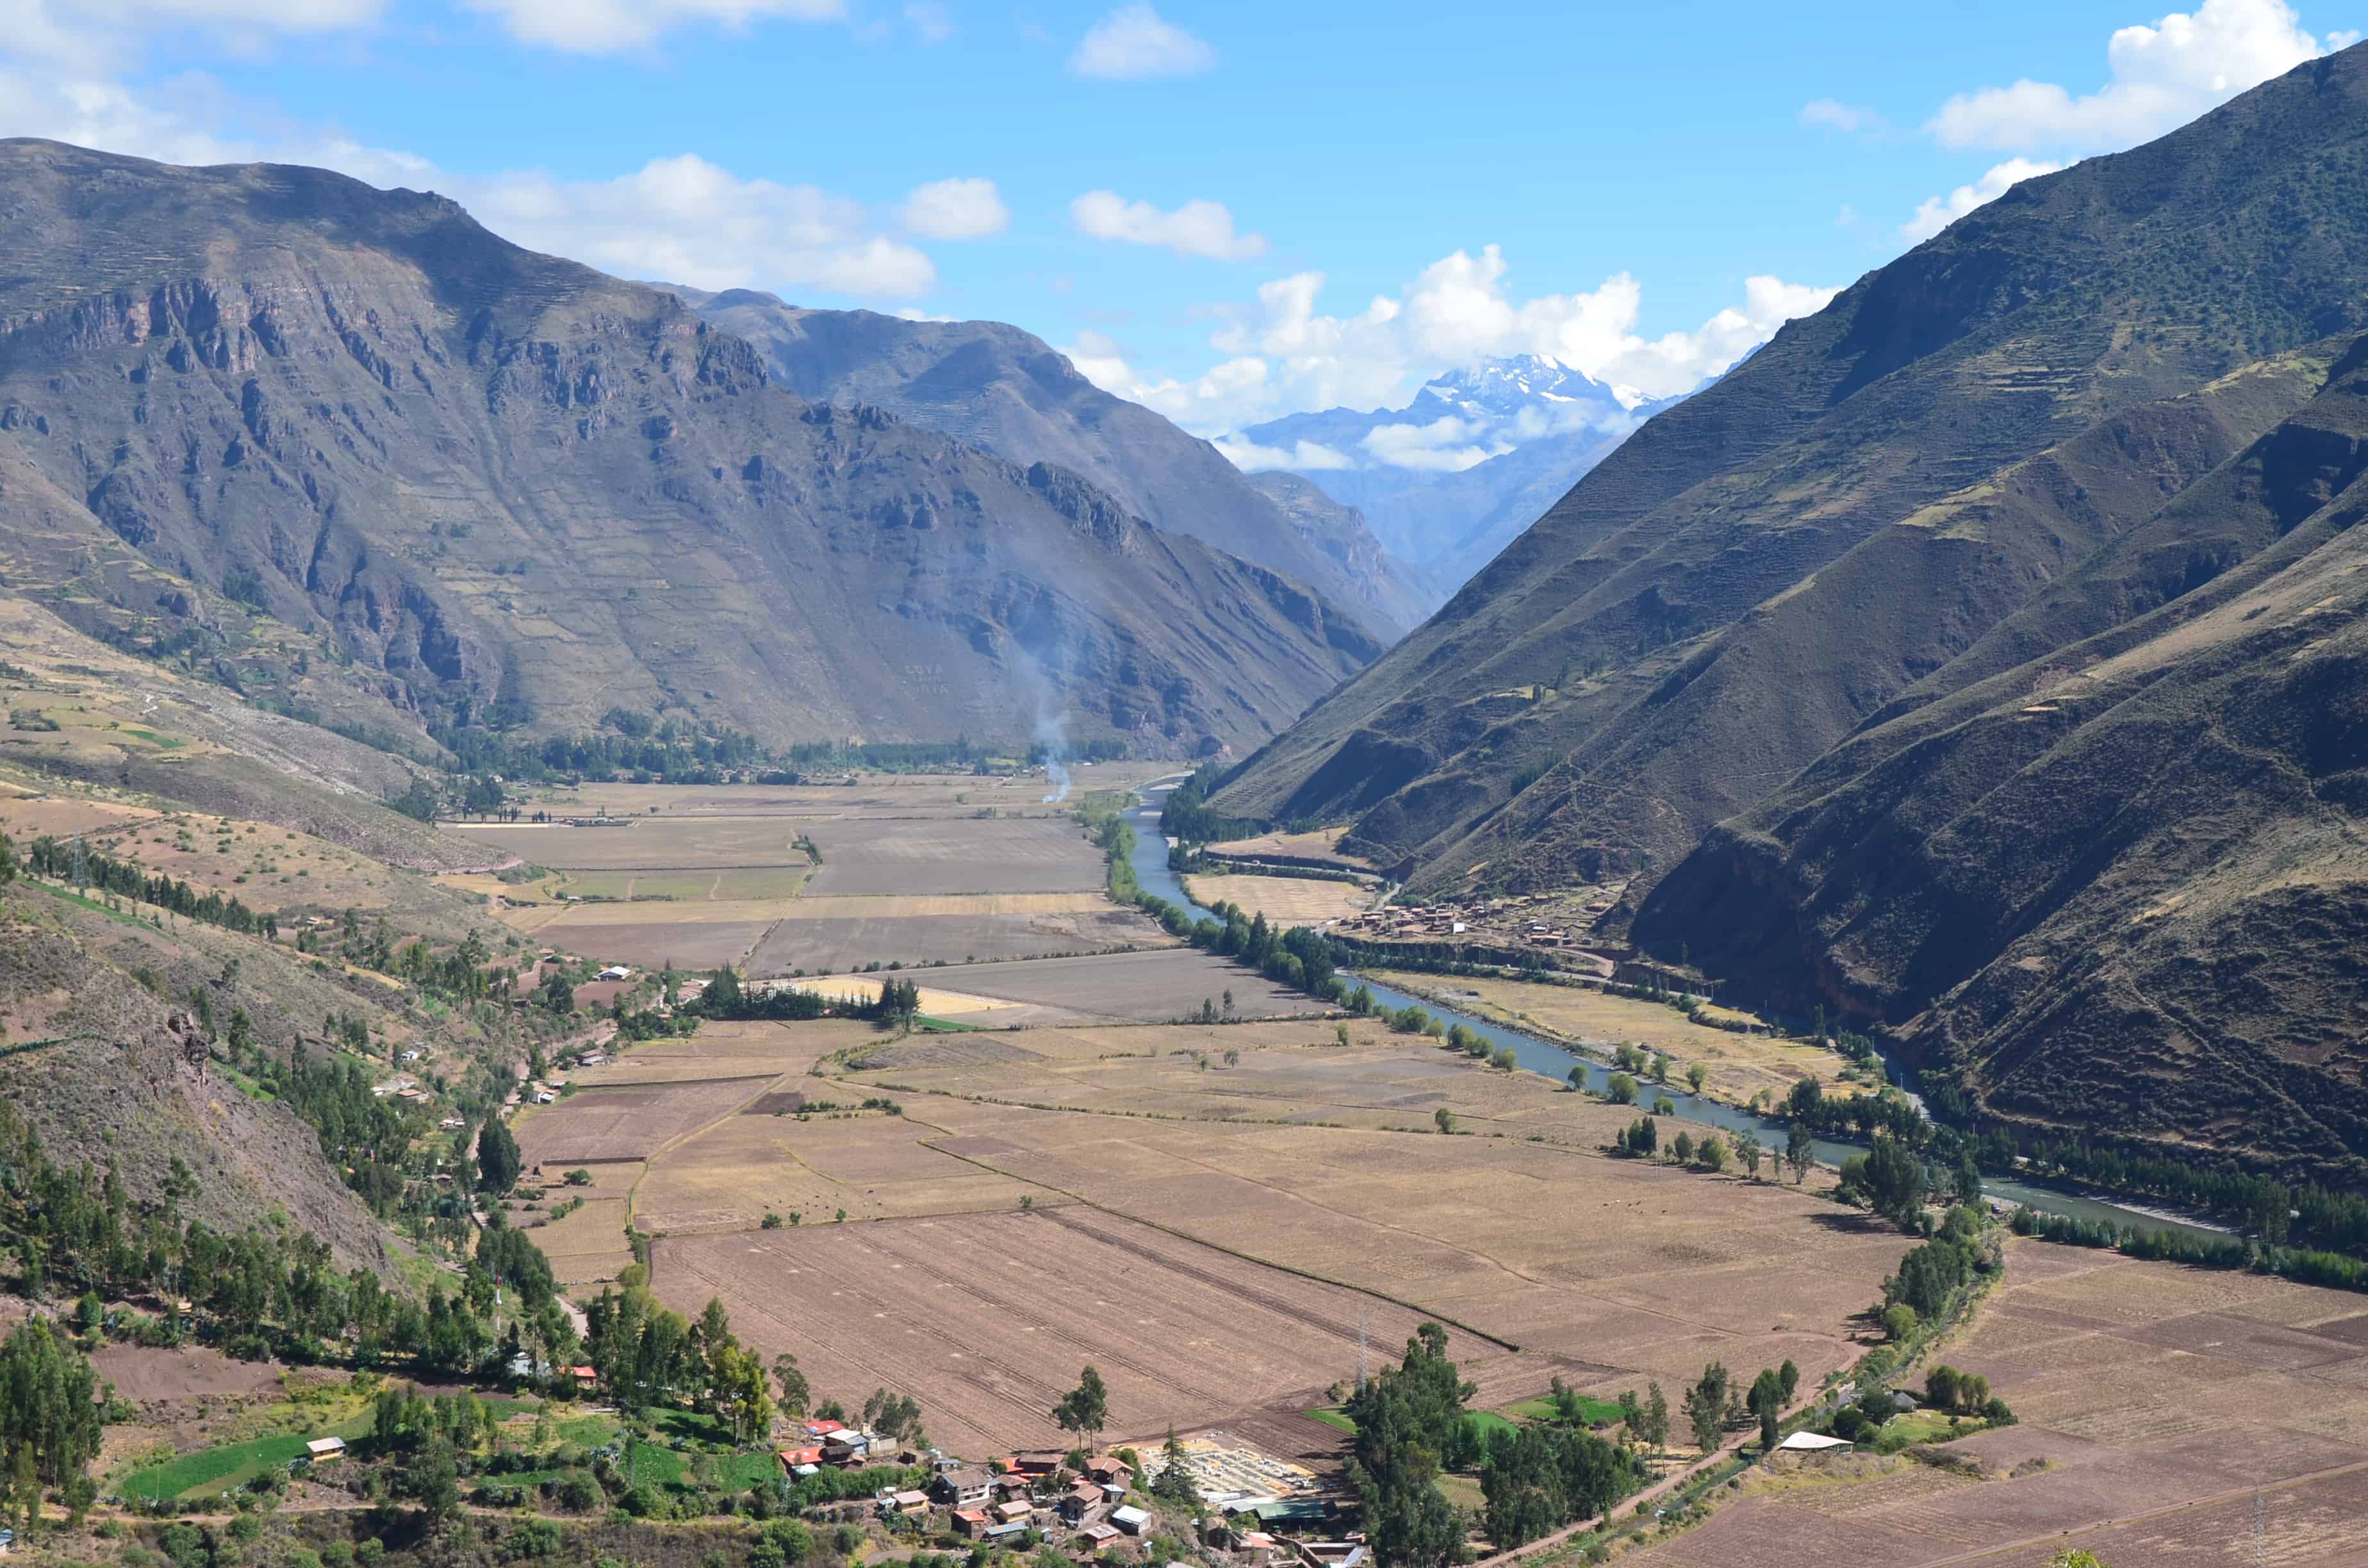 View of Valle Sagrado and Río Urubamba from above Taray, Peru